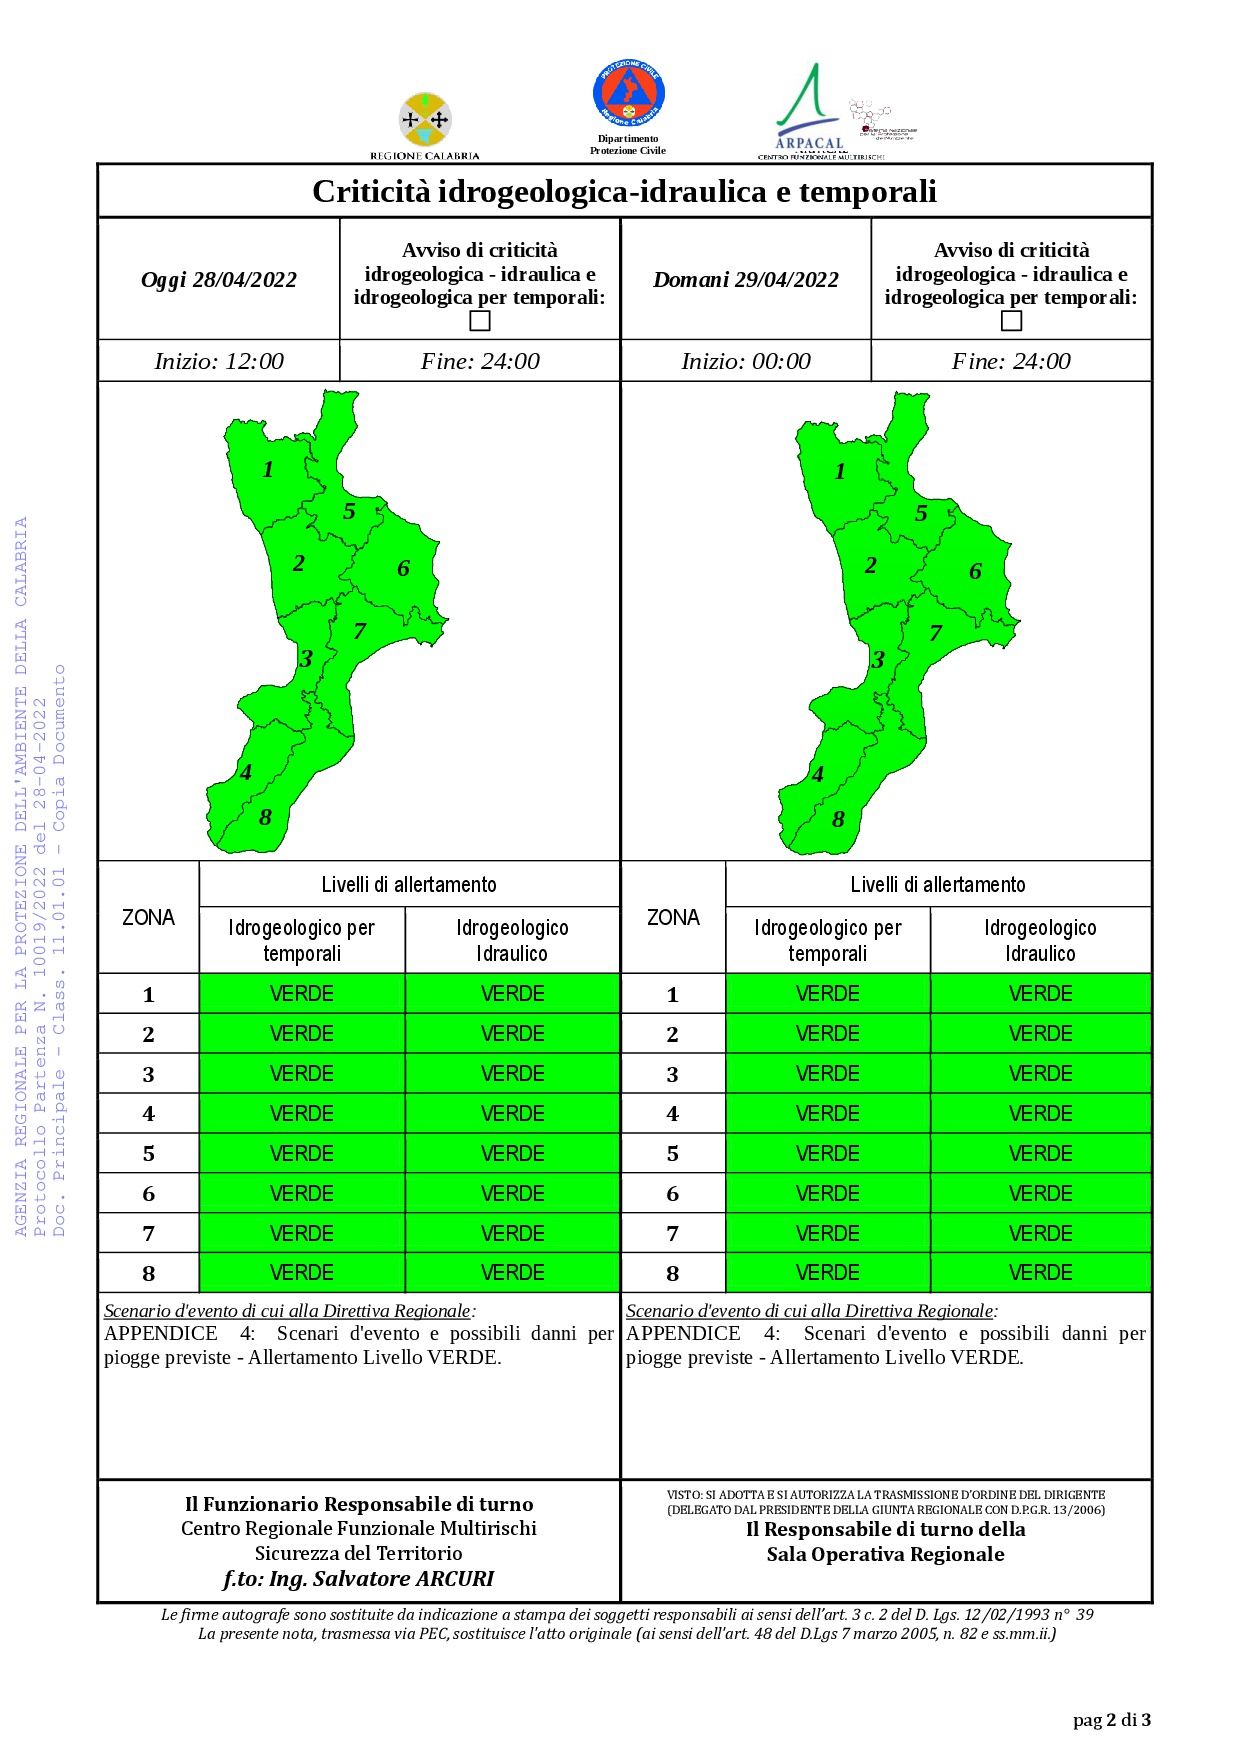 Criticità idrogeologica-idraulica e temporali in Calabria 28-04-2022